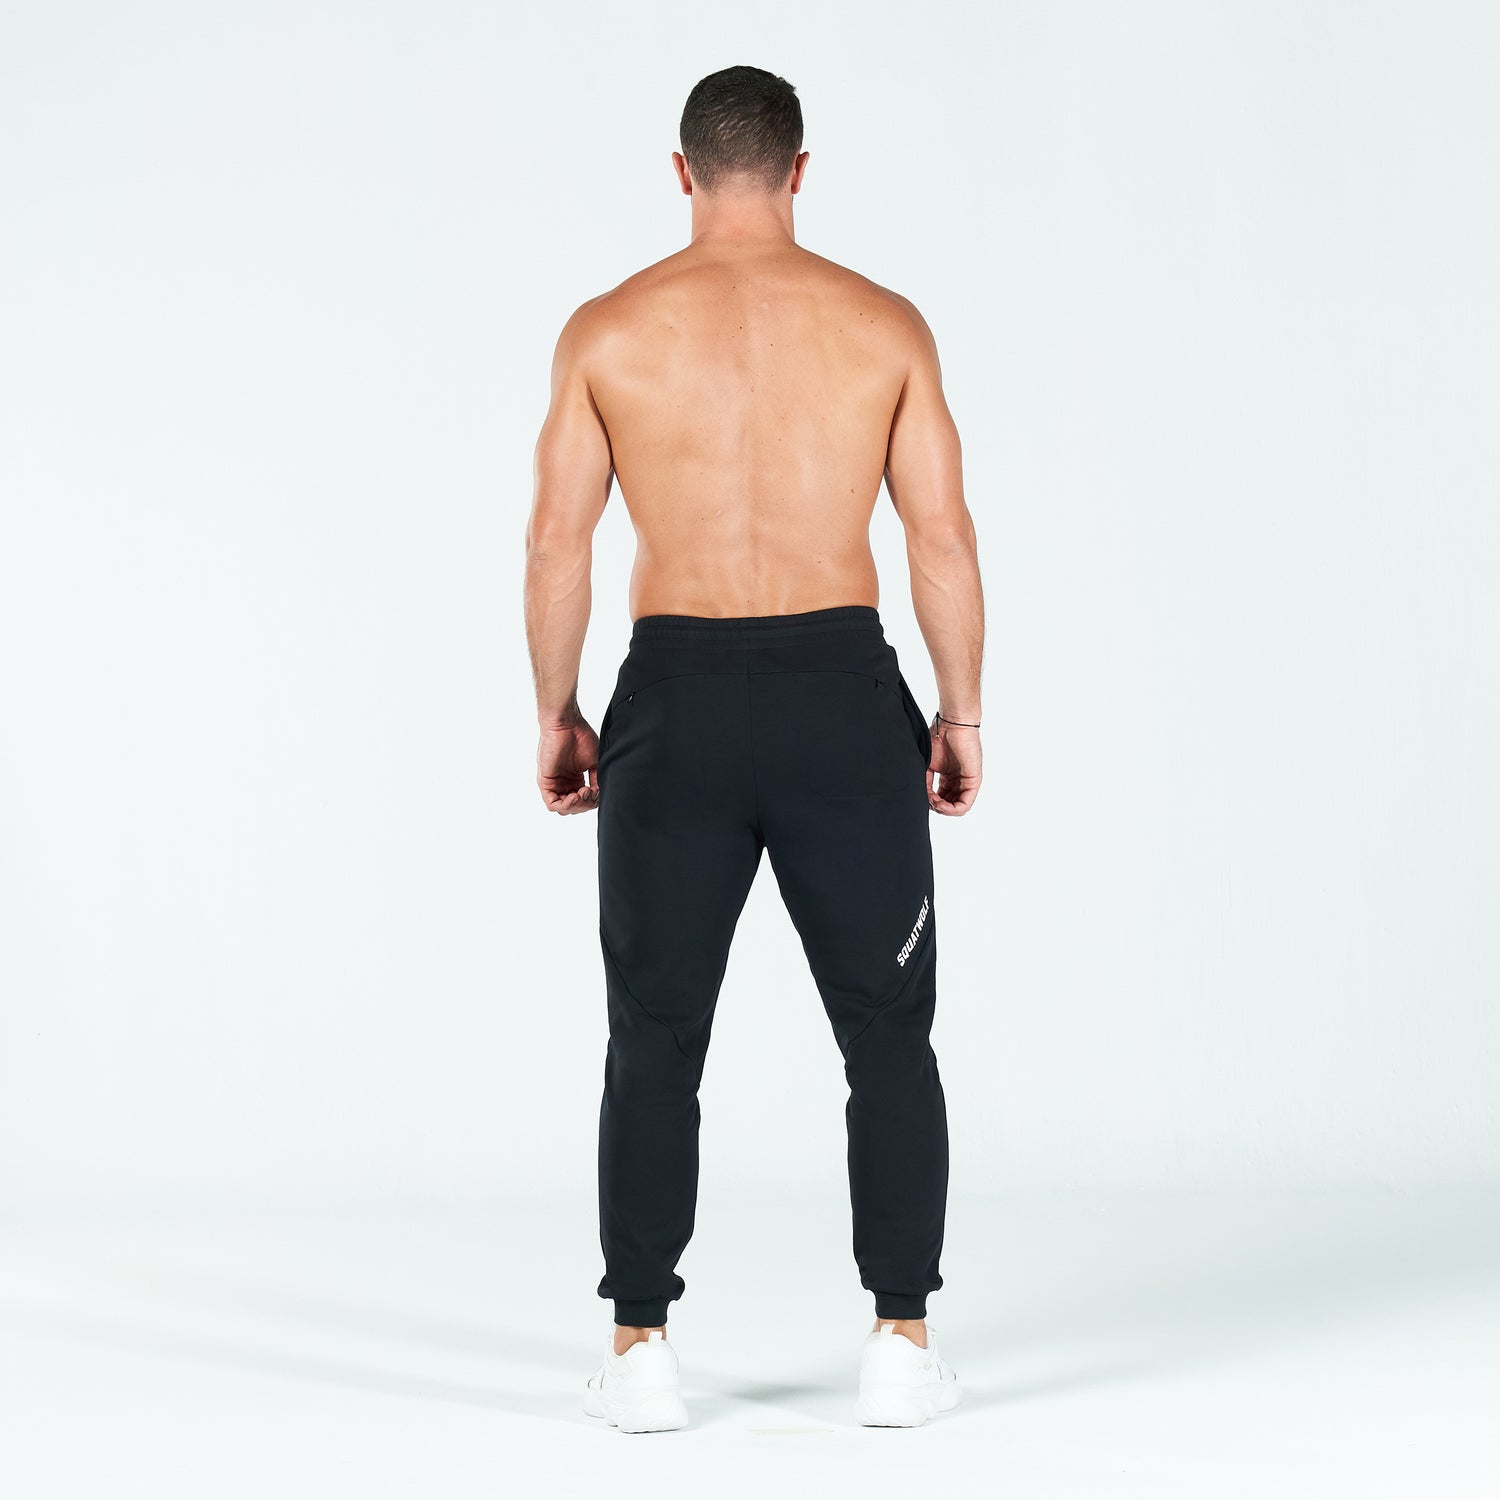 squatwolf-workout-clothes-core-stay-active-joggers-black-gym-pants-for-men